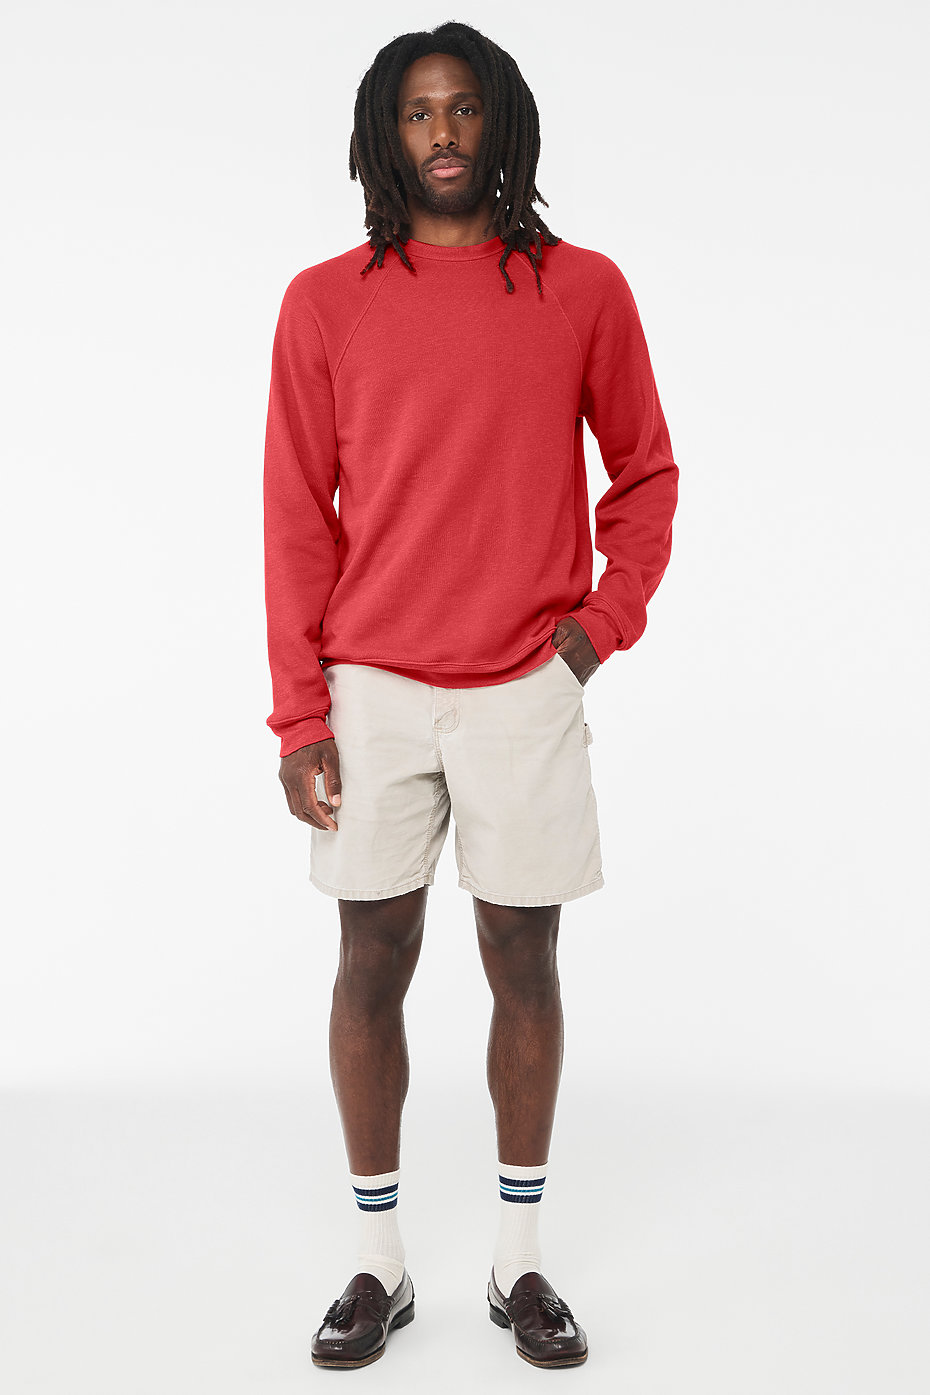 Custom Sweatshirts For Men | Wholesale Crewneck Sweatshirts | Raglan ...